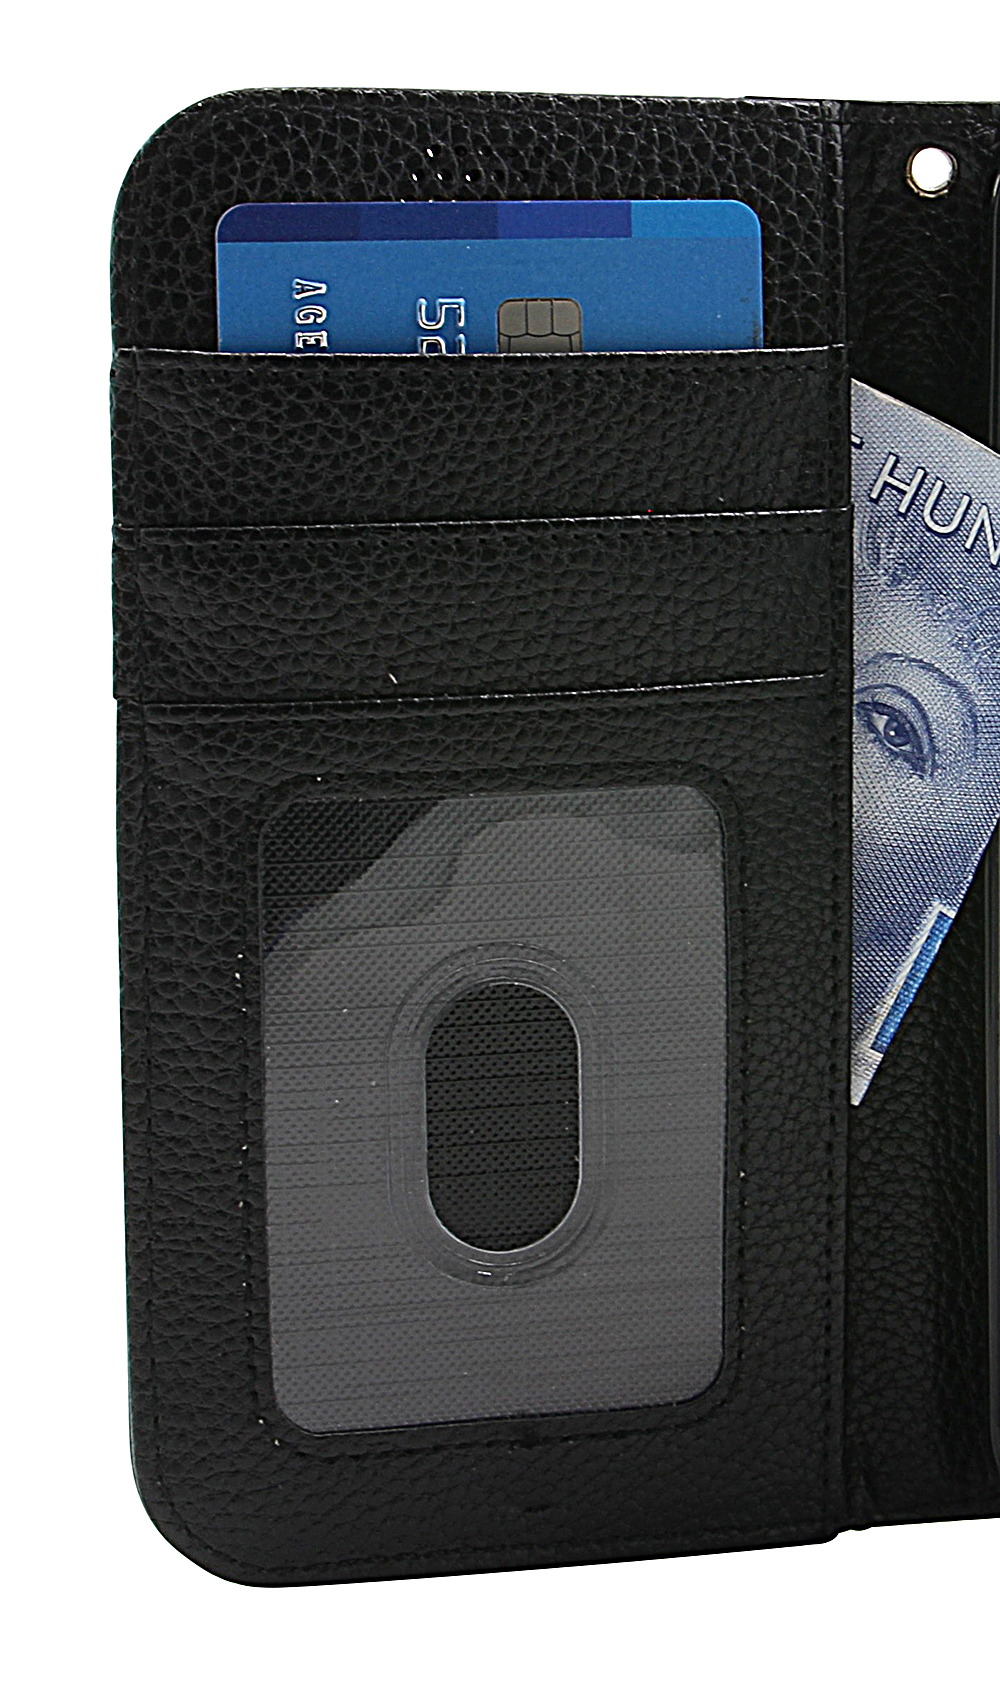 billigamobilskydd.seNew Standcase Wallet Moto E4 Plus (XT1770 / XT1771)